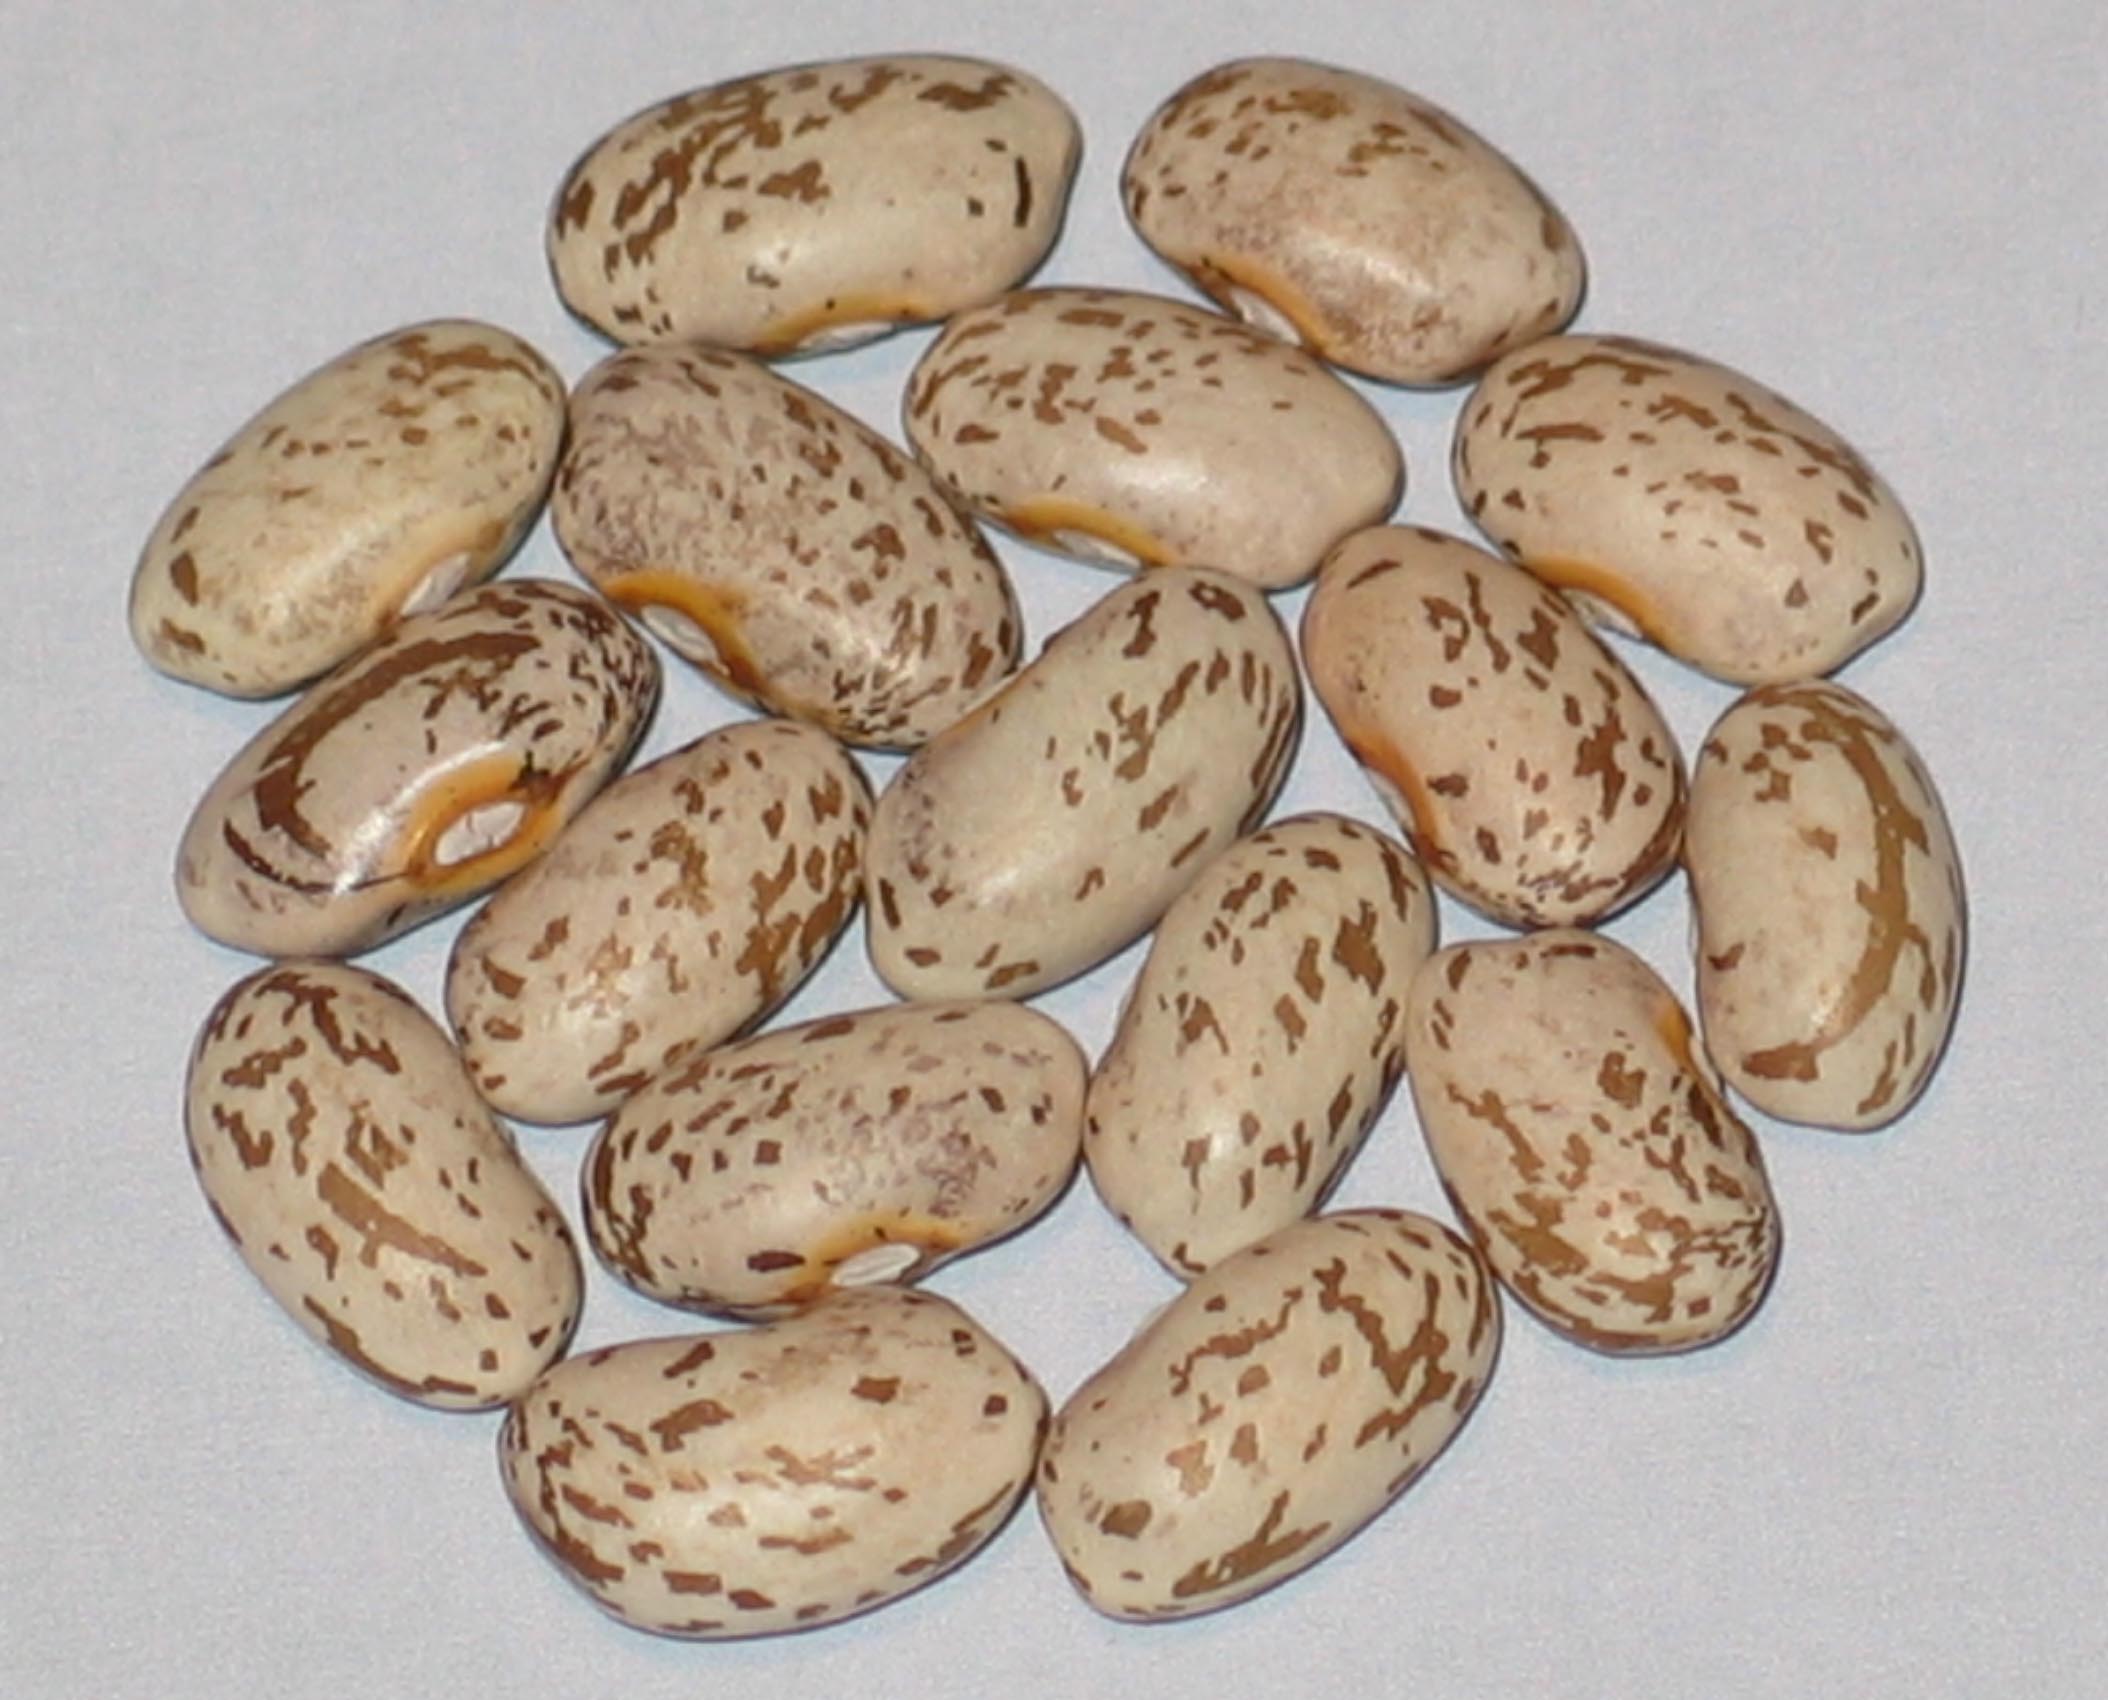 image of North Star Bush Pinto beans